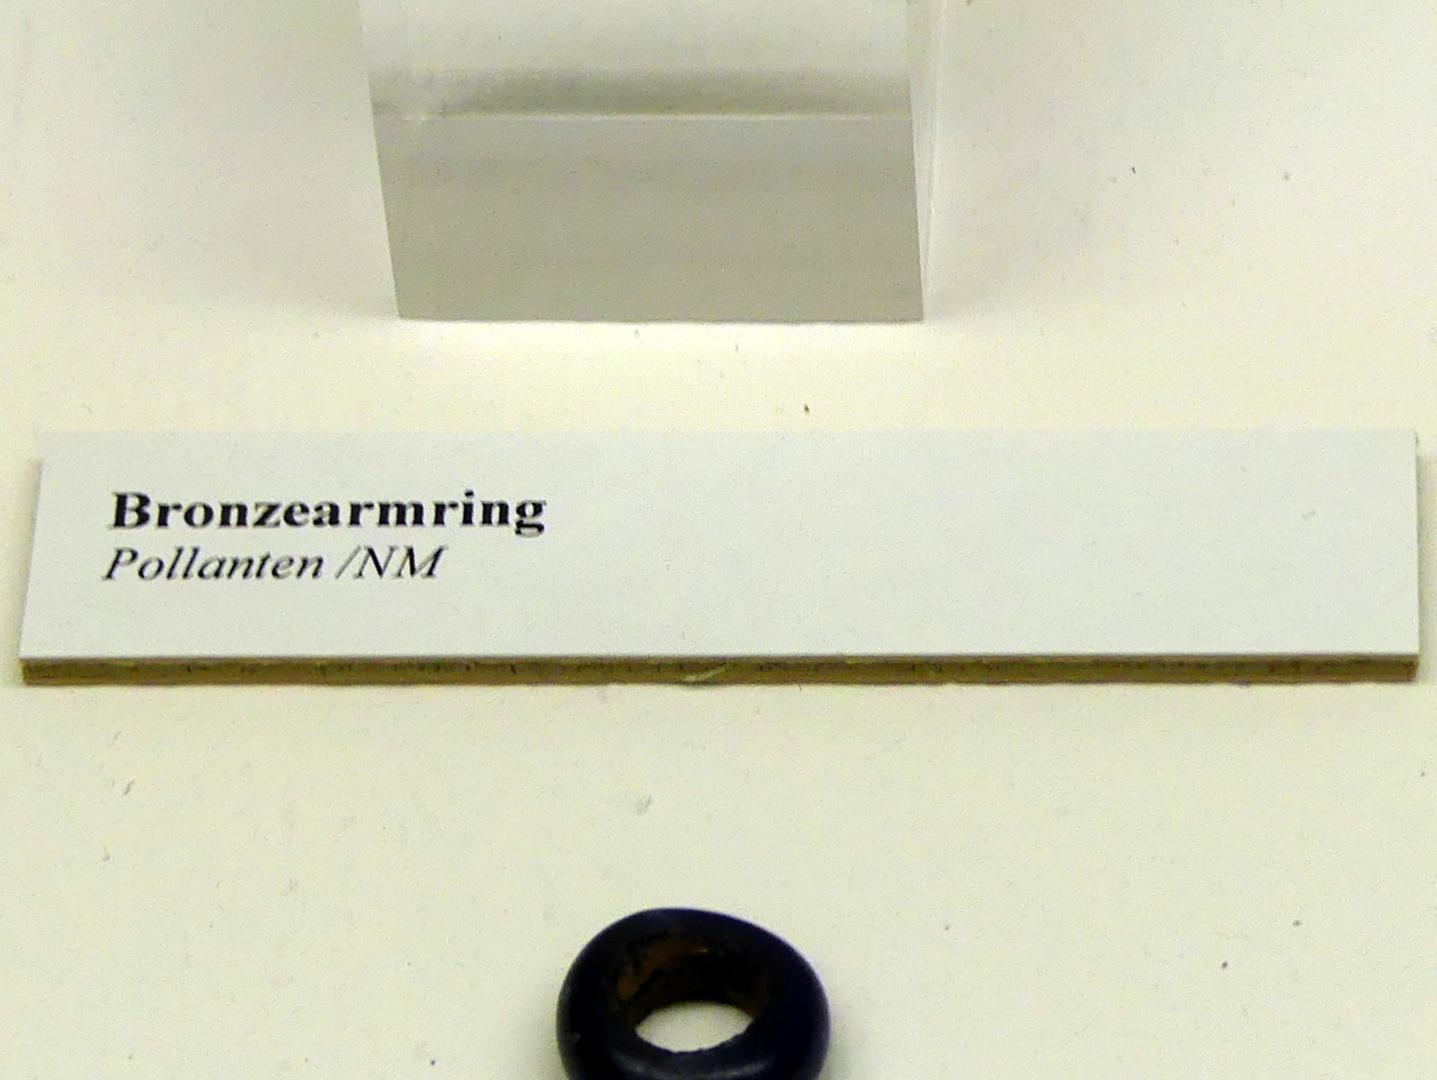 Bronzearmring, Spätlatènezeit D, 700 - 100 v. Chr., Bild 2/2